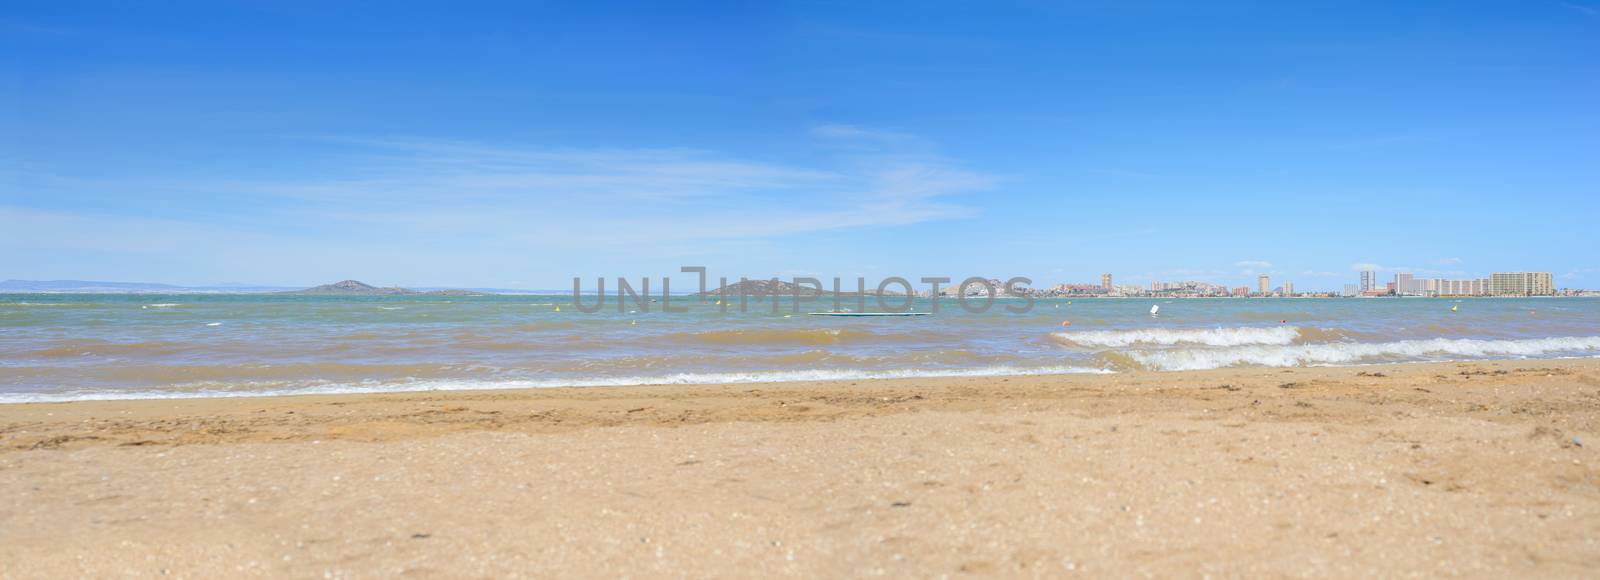 European sandy beach and blue sea, panoramic photo